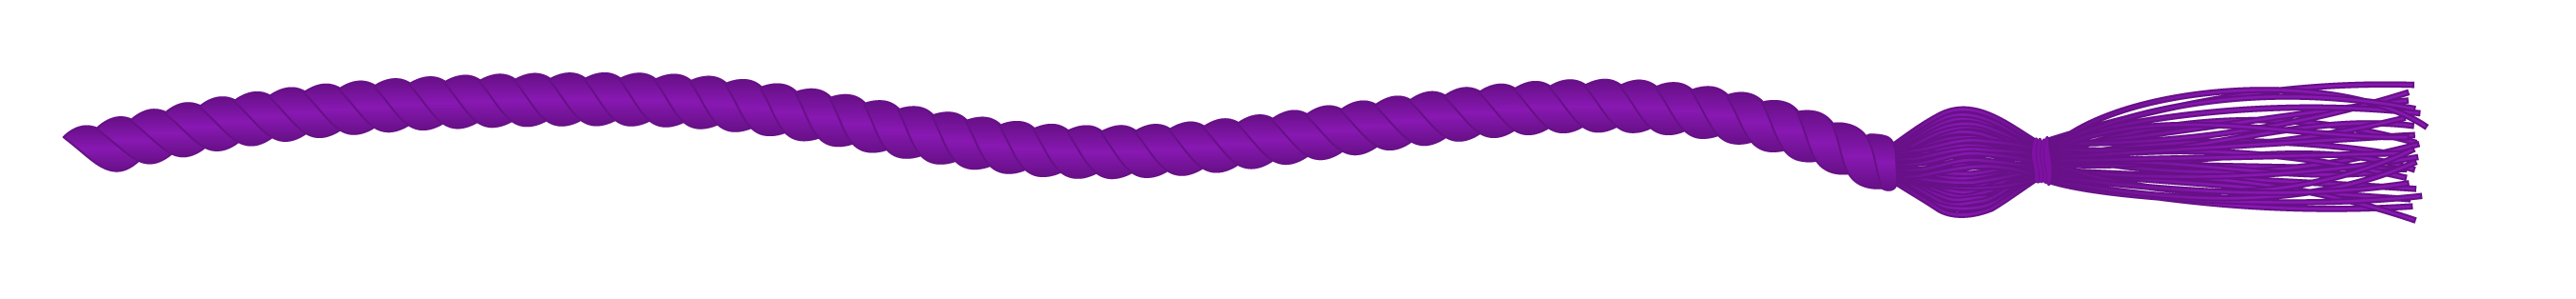 Purple commencement cord